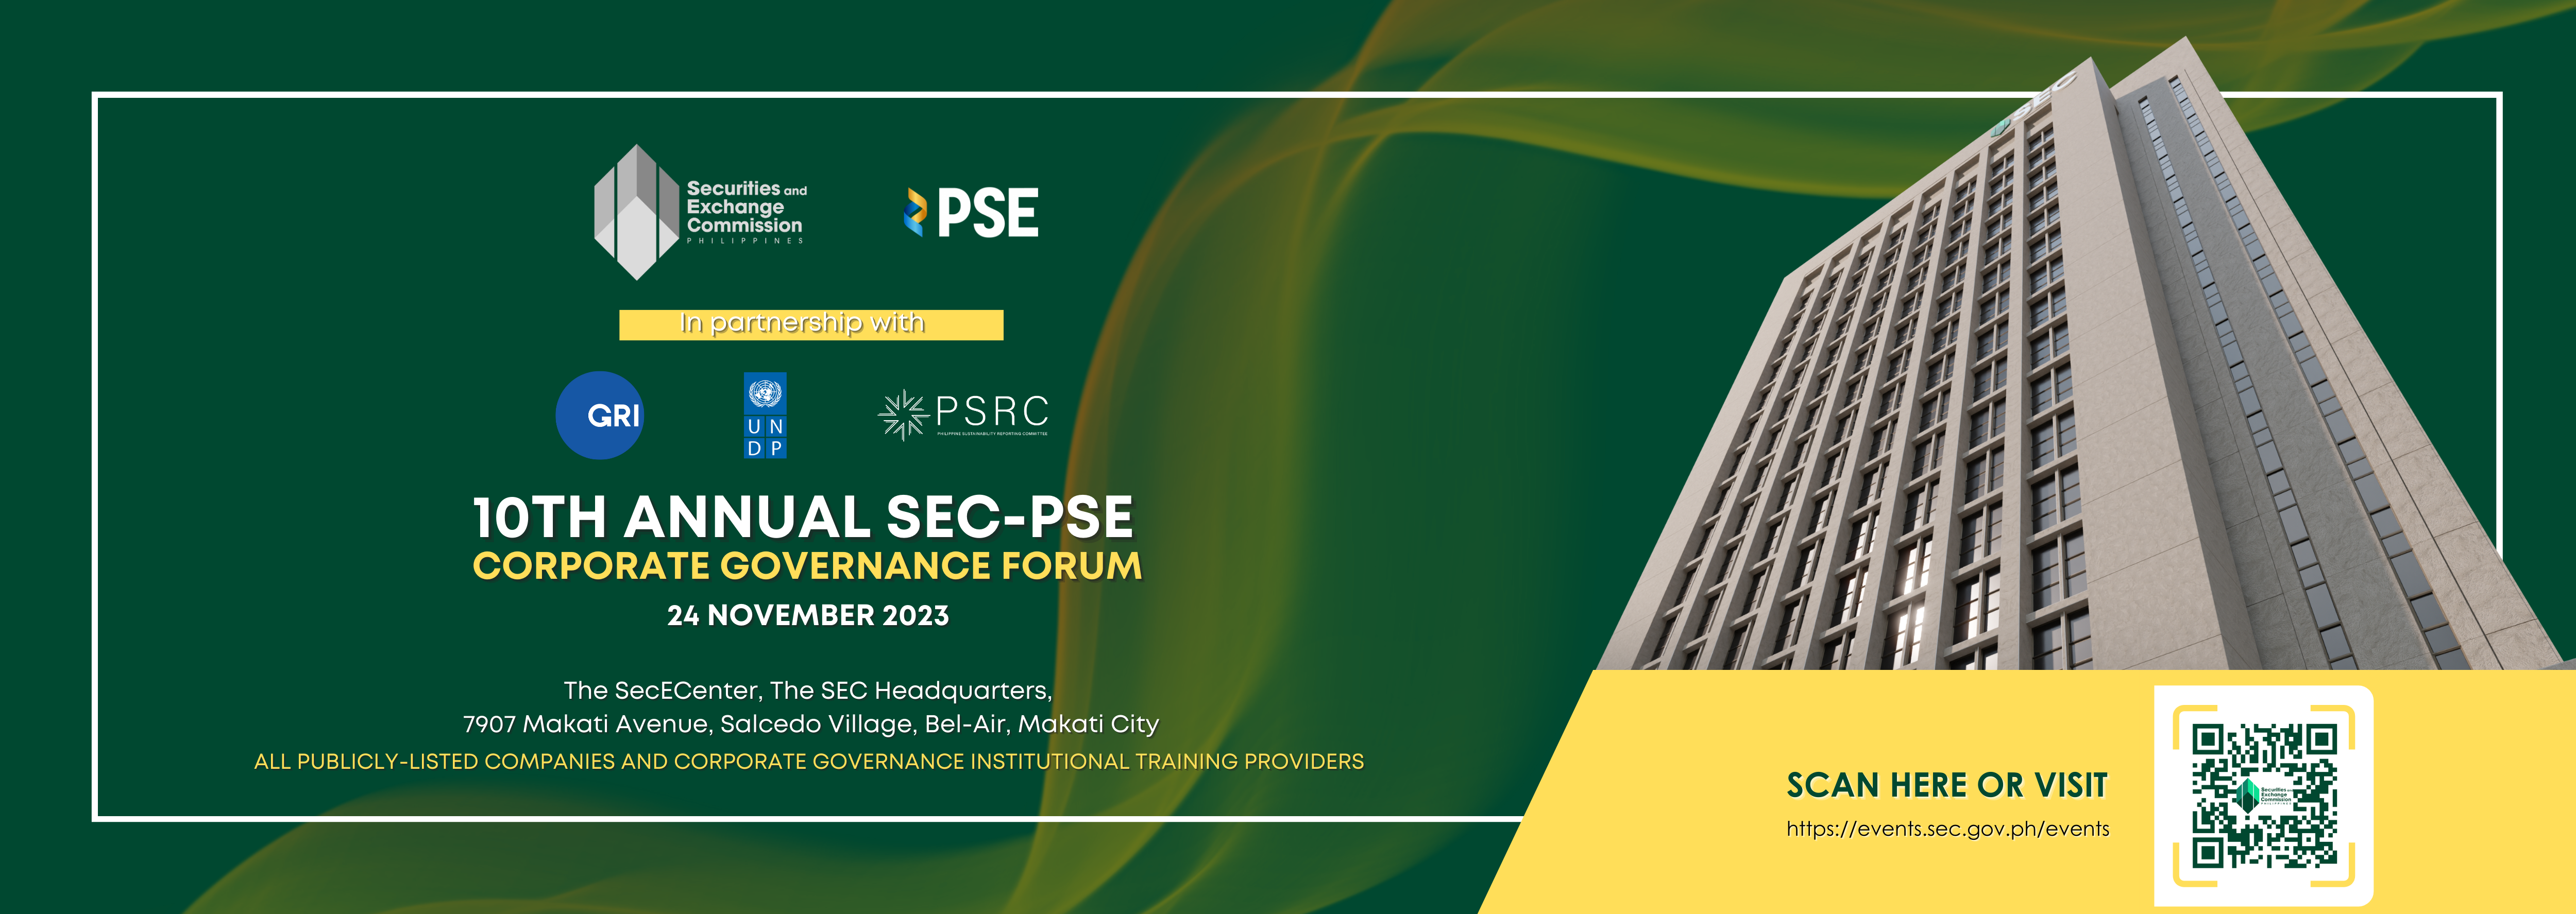 10th Annual SEC-PSE Corporate Governance Forum